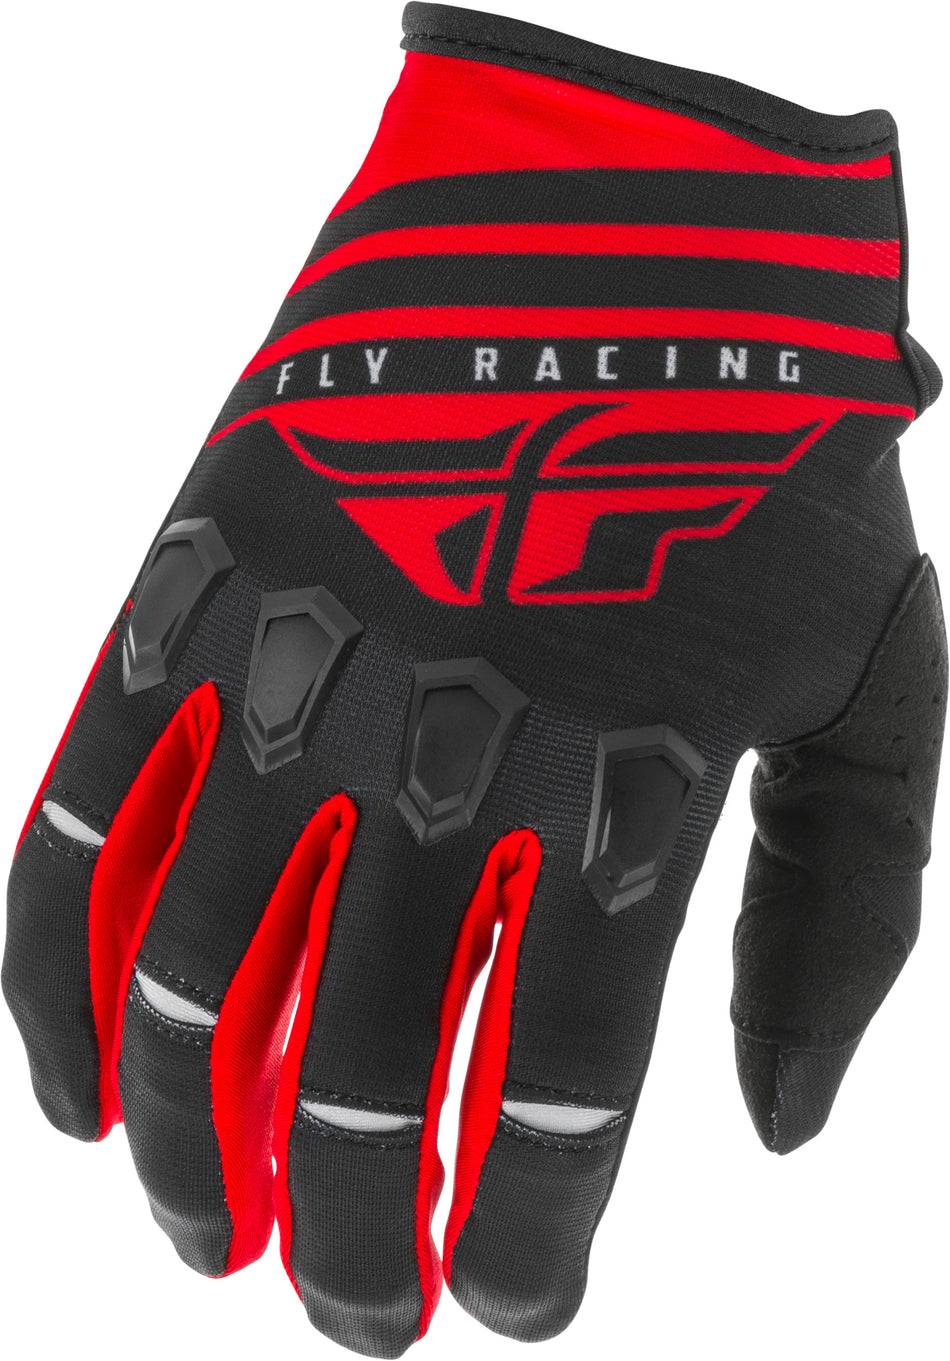 FLY RACING Kinetic K220 Gloves Red/Black/White Sz 13 373-51313